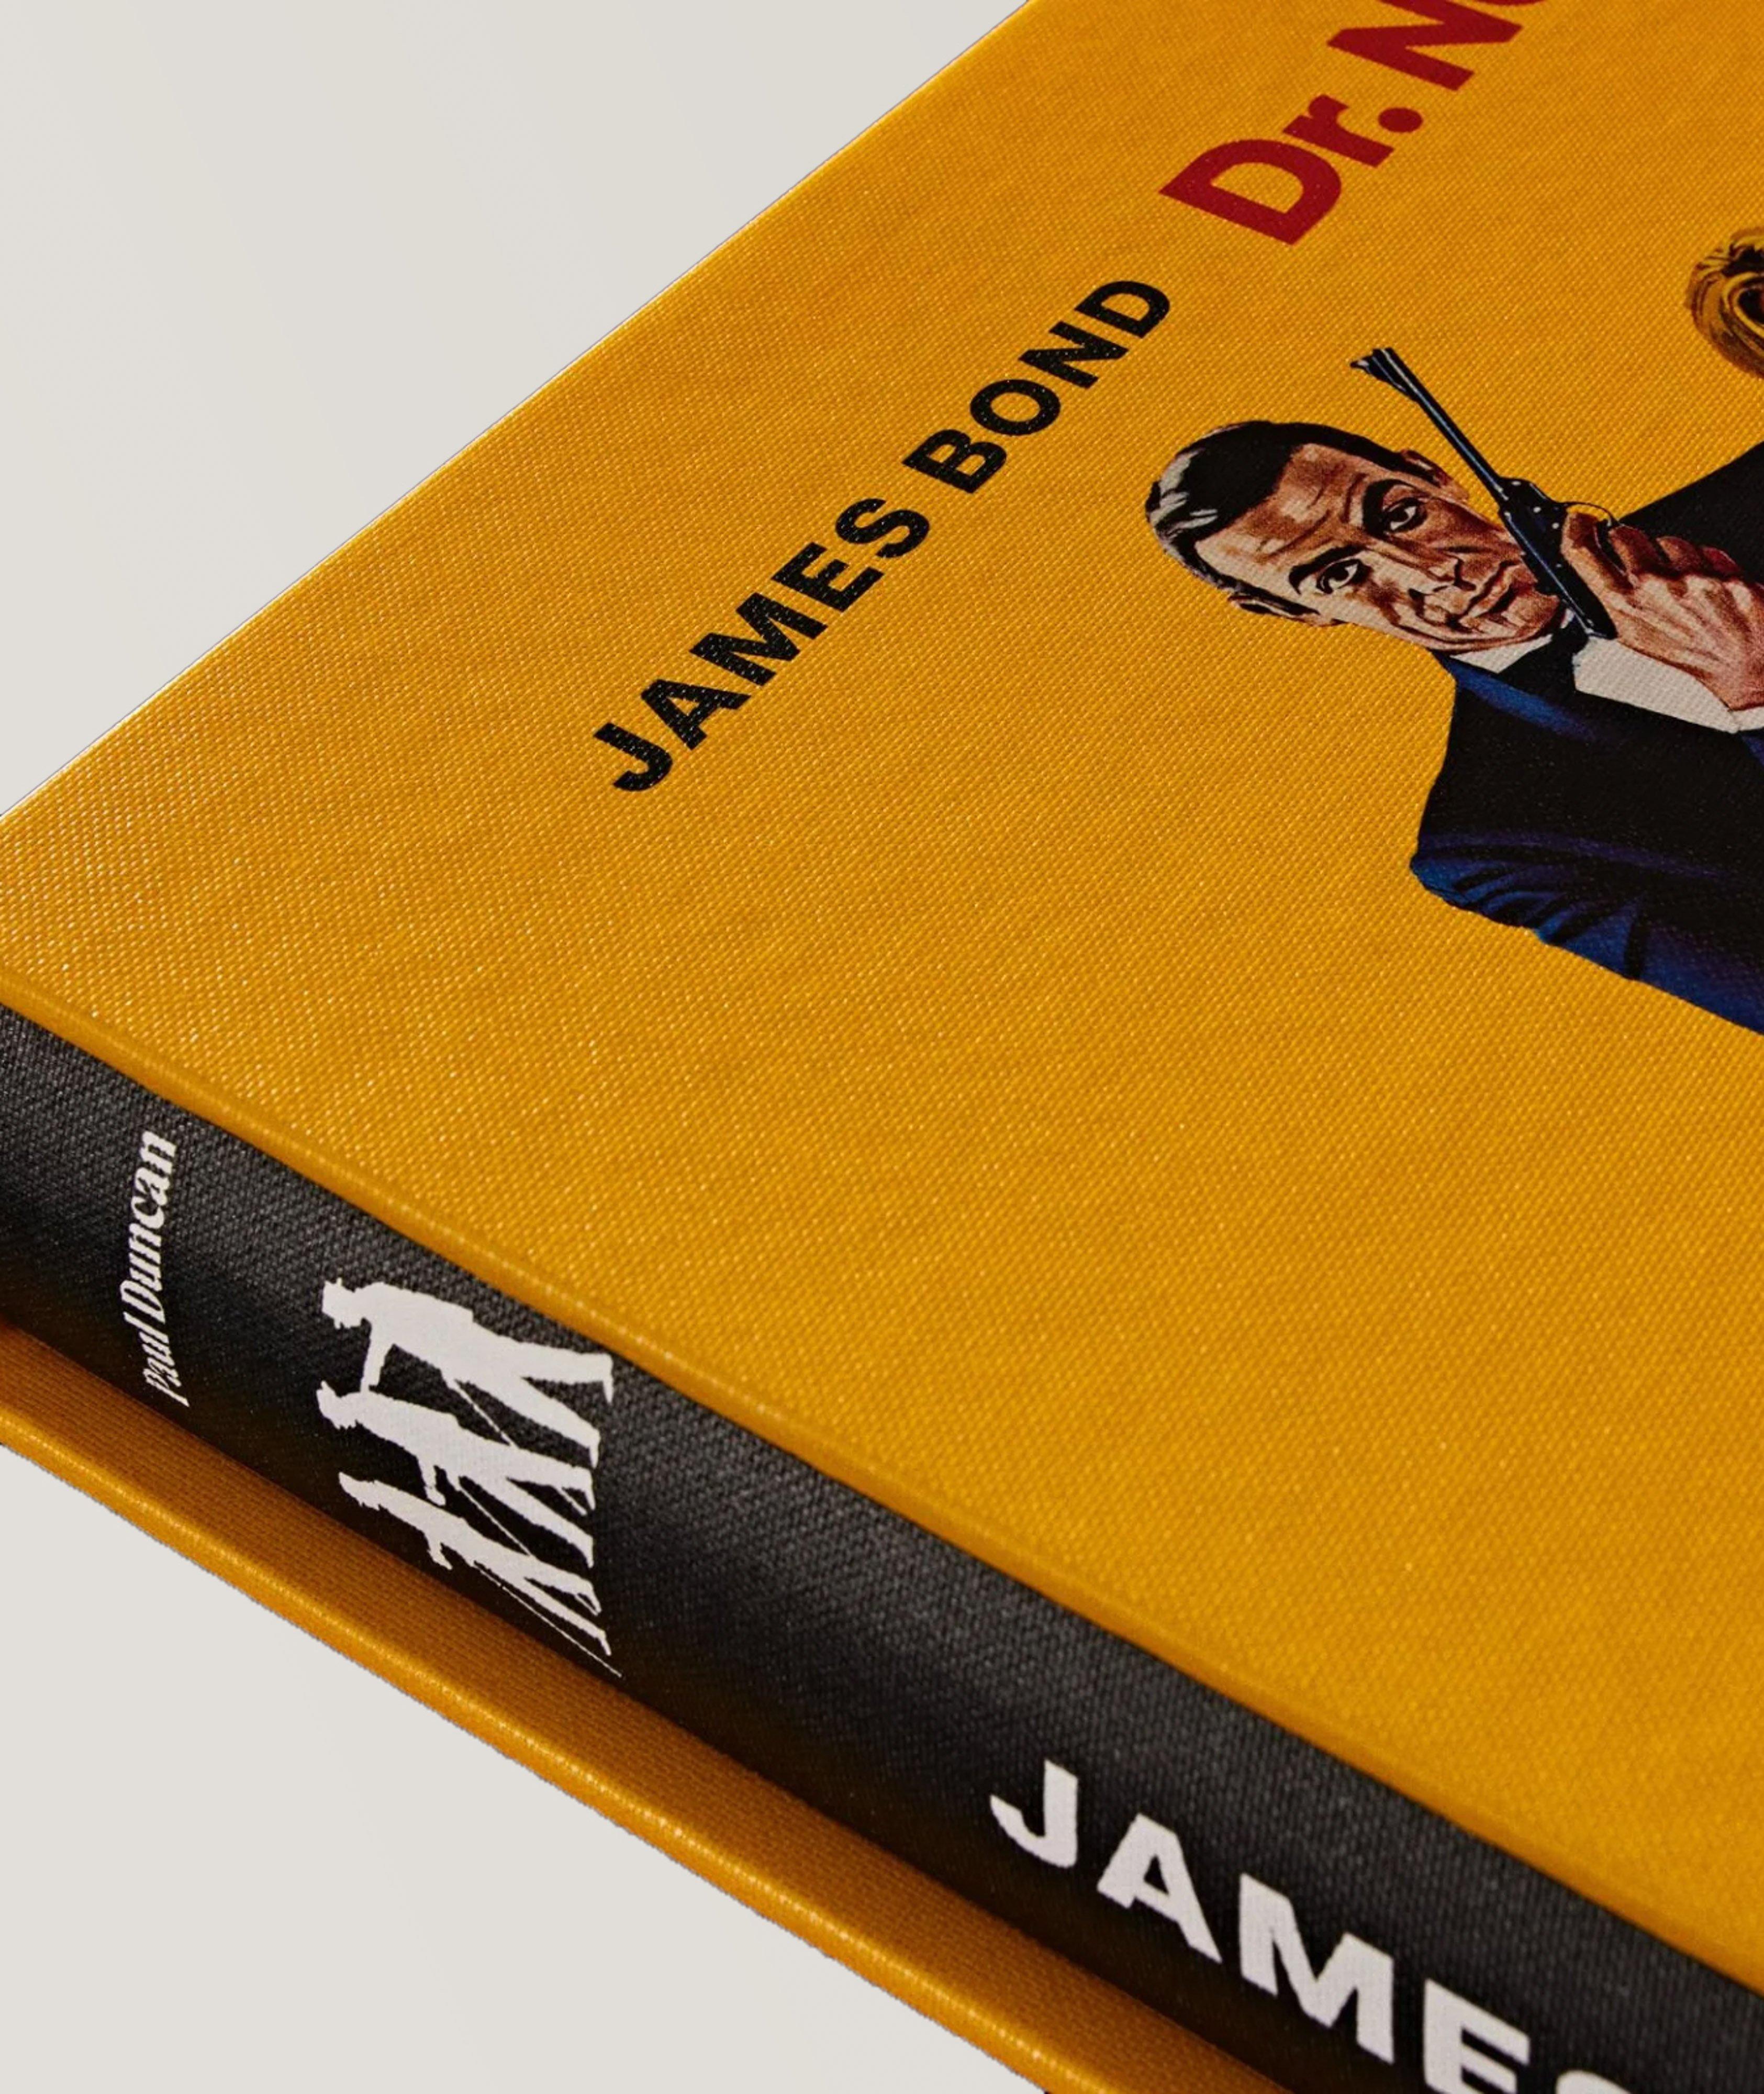 Limited Edition James Bond Dr. No Book image 2